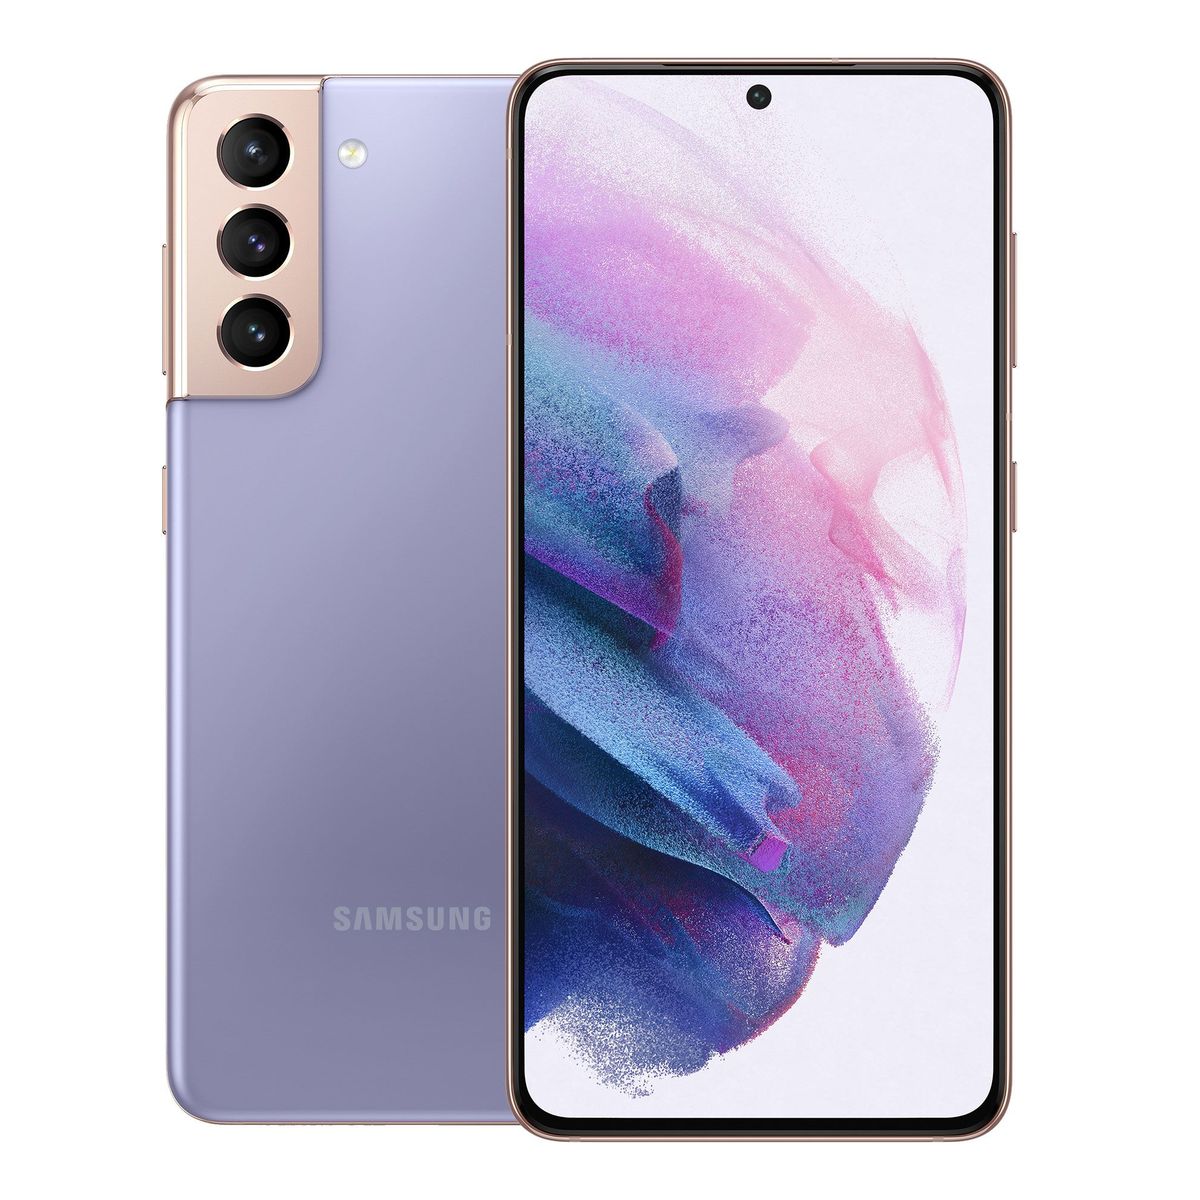 Samsung Galaxy S21 Smartphone 5G 256GB/8GB Phantom Violet